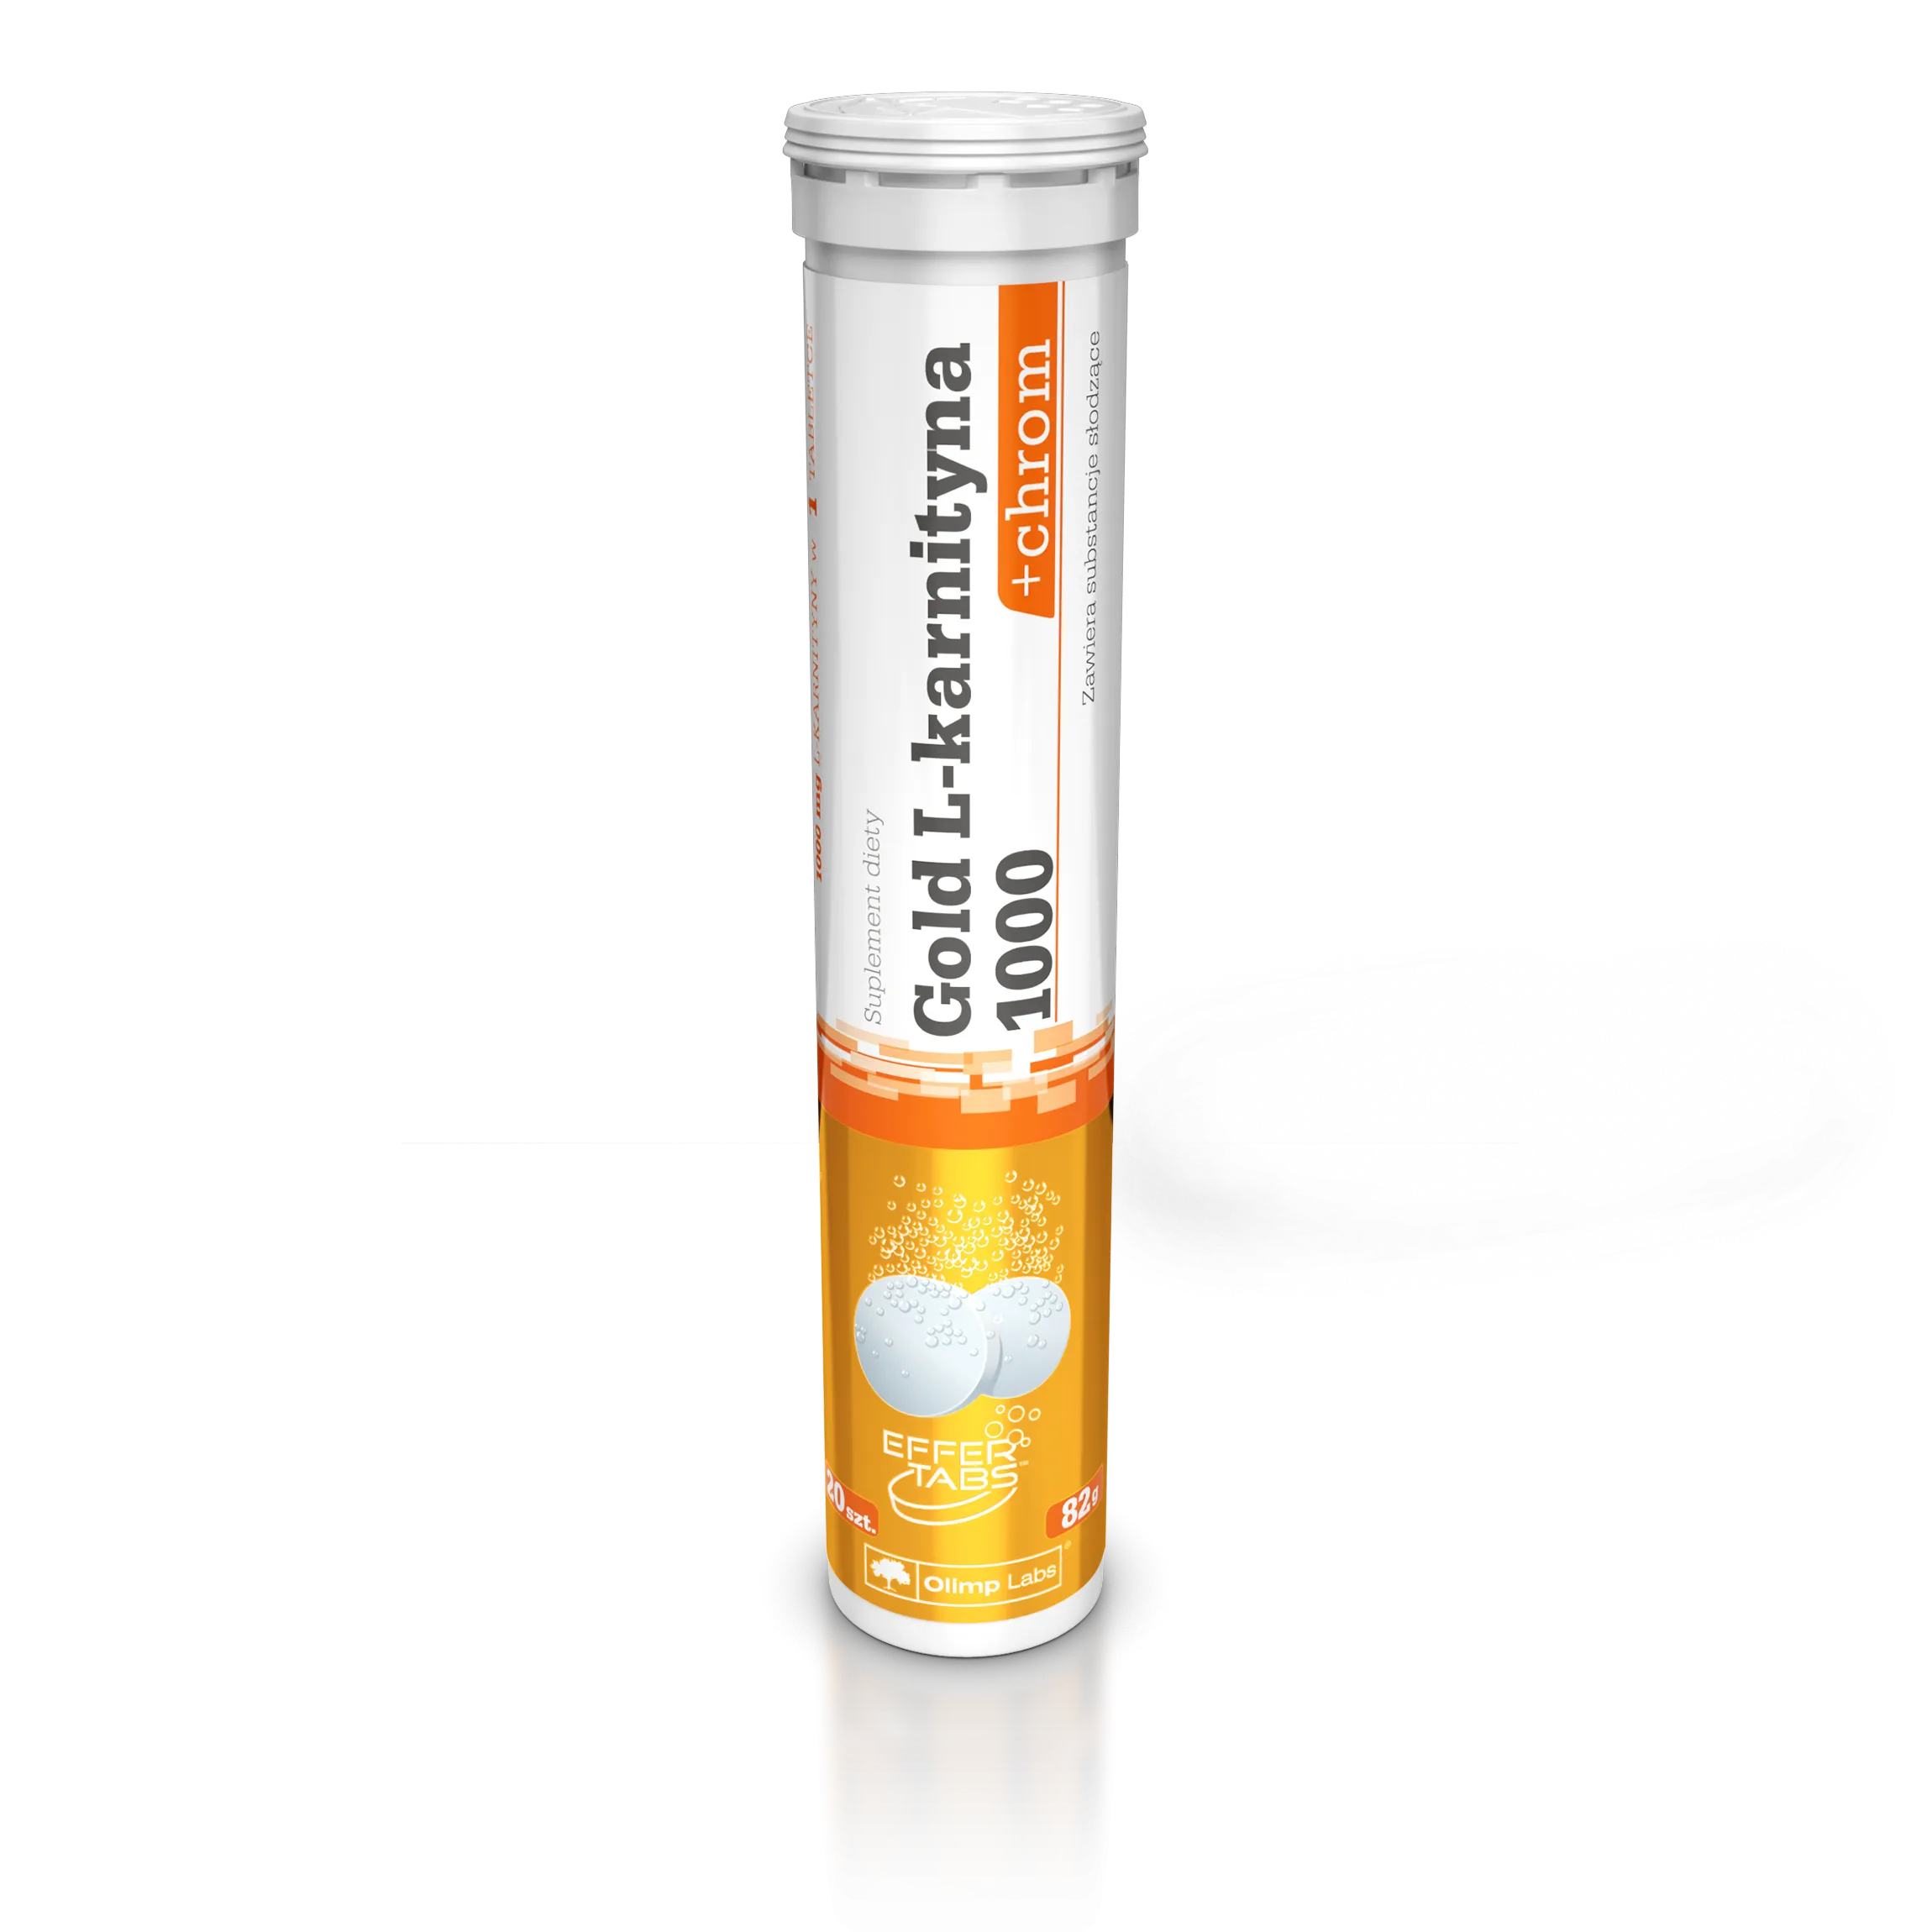 Olimp Gold L-Karnityna + Chrom, suplement diety, 20 tabletek musujących